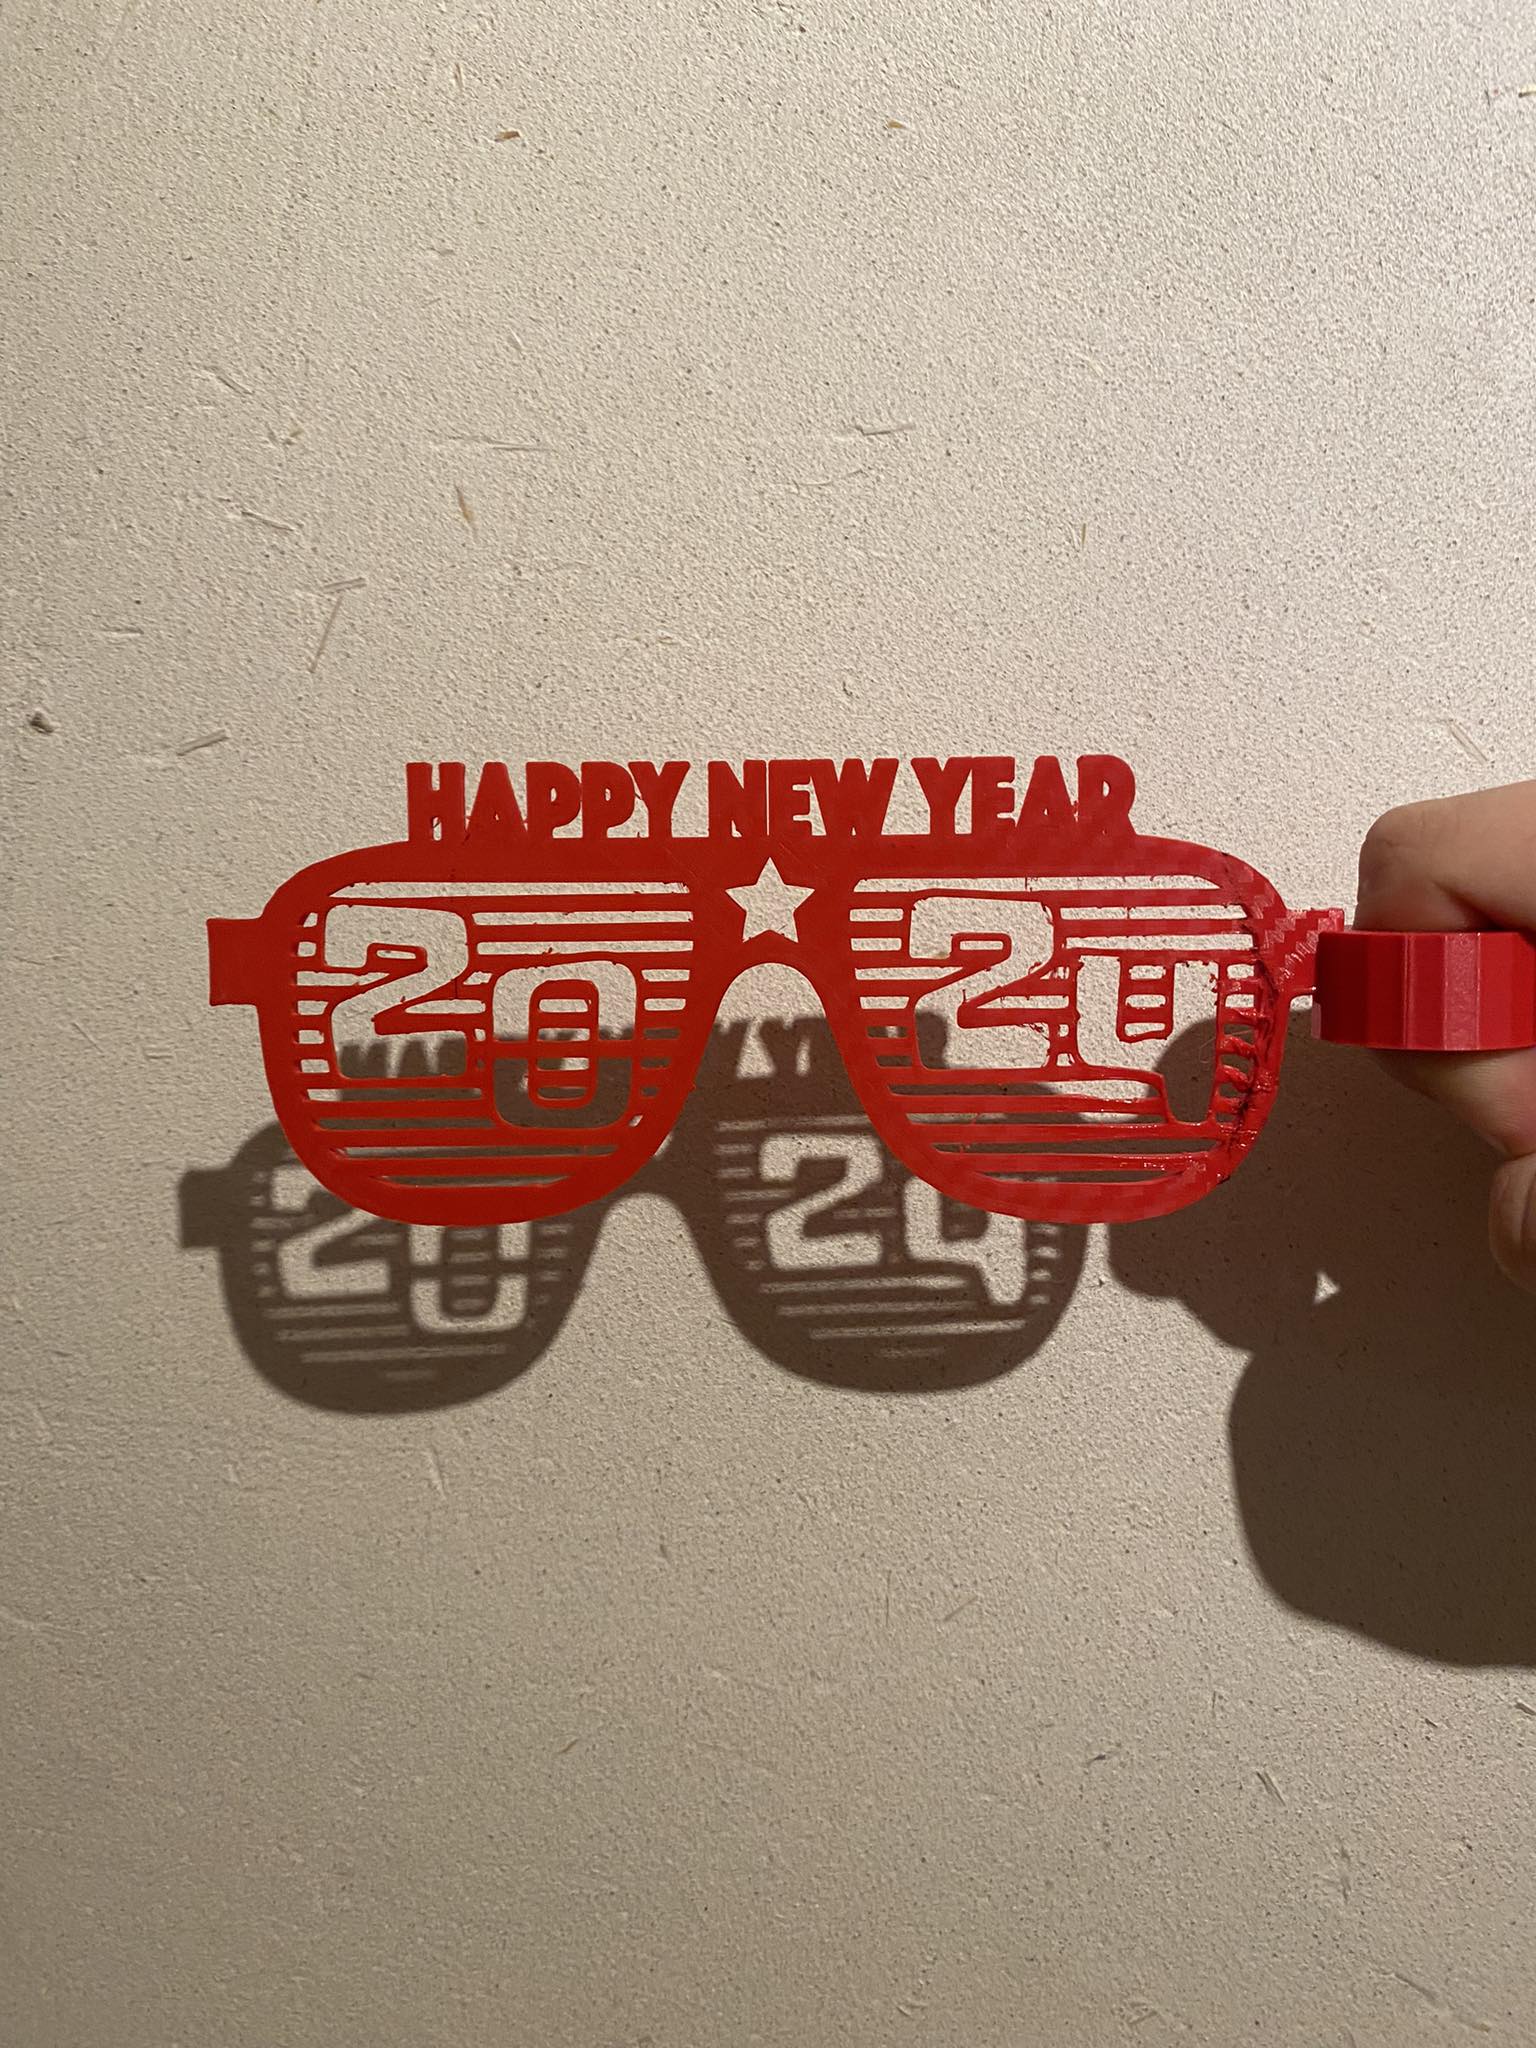 2024 New year finger held glasses by Augustas Kazlauskas Download